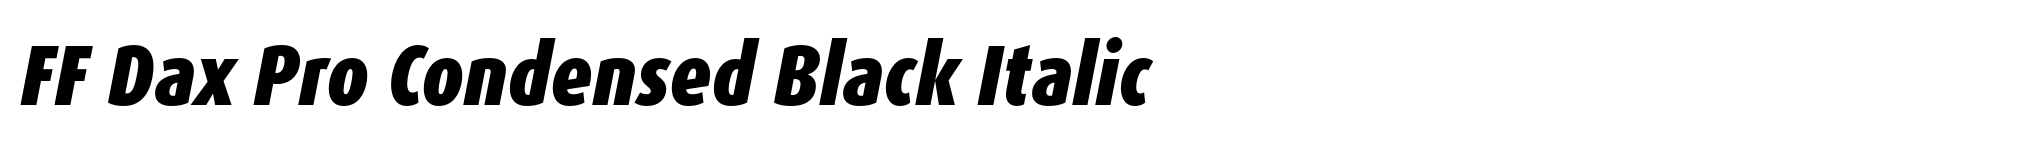 FF Dax Pro Condensed Black Italic image